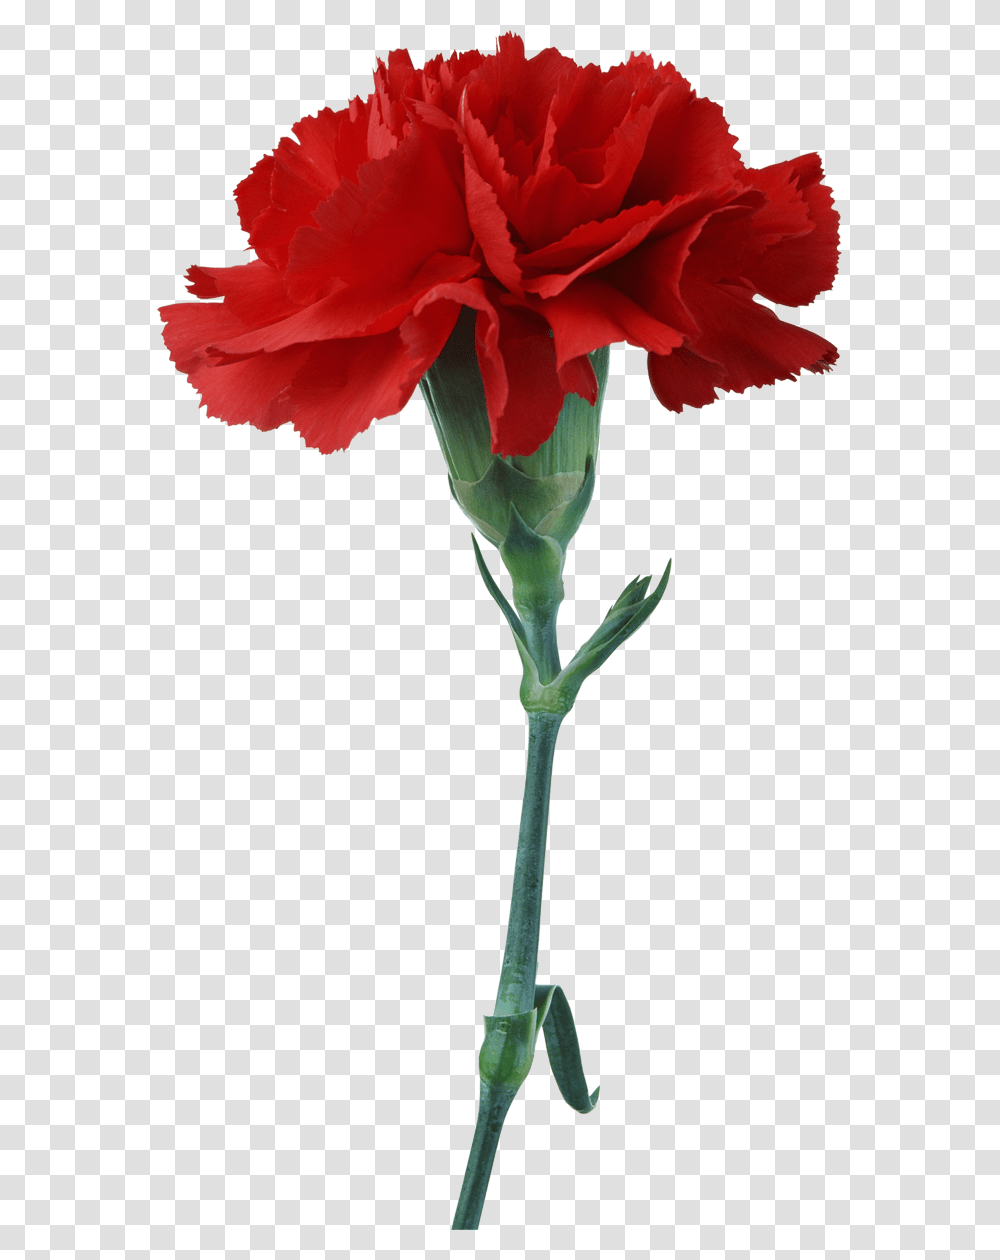 Free Download Red Carnation Clipart Carnation Flower National Flower Of Spain, Plant, Blossom, Rose, Anther Transparent Png